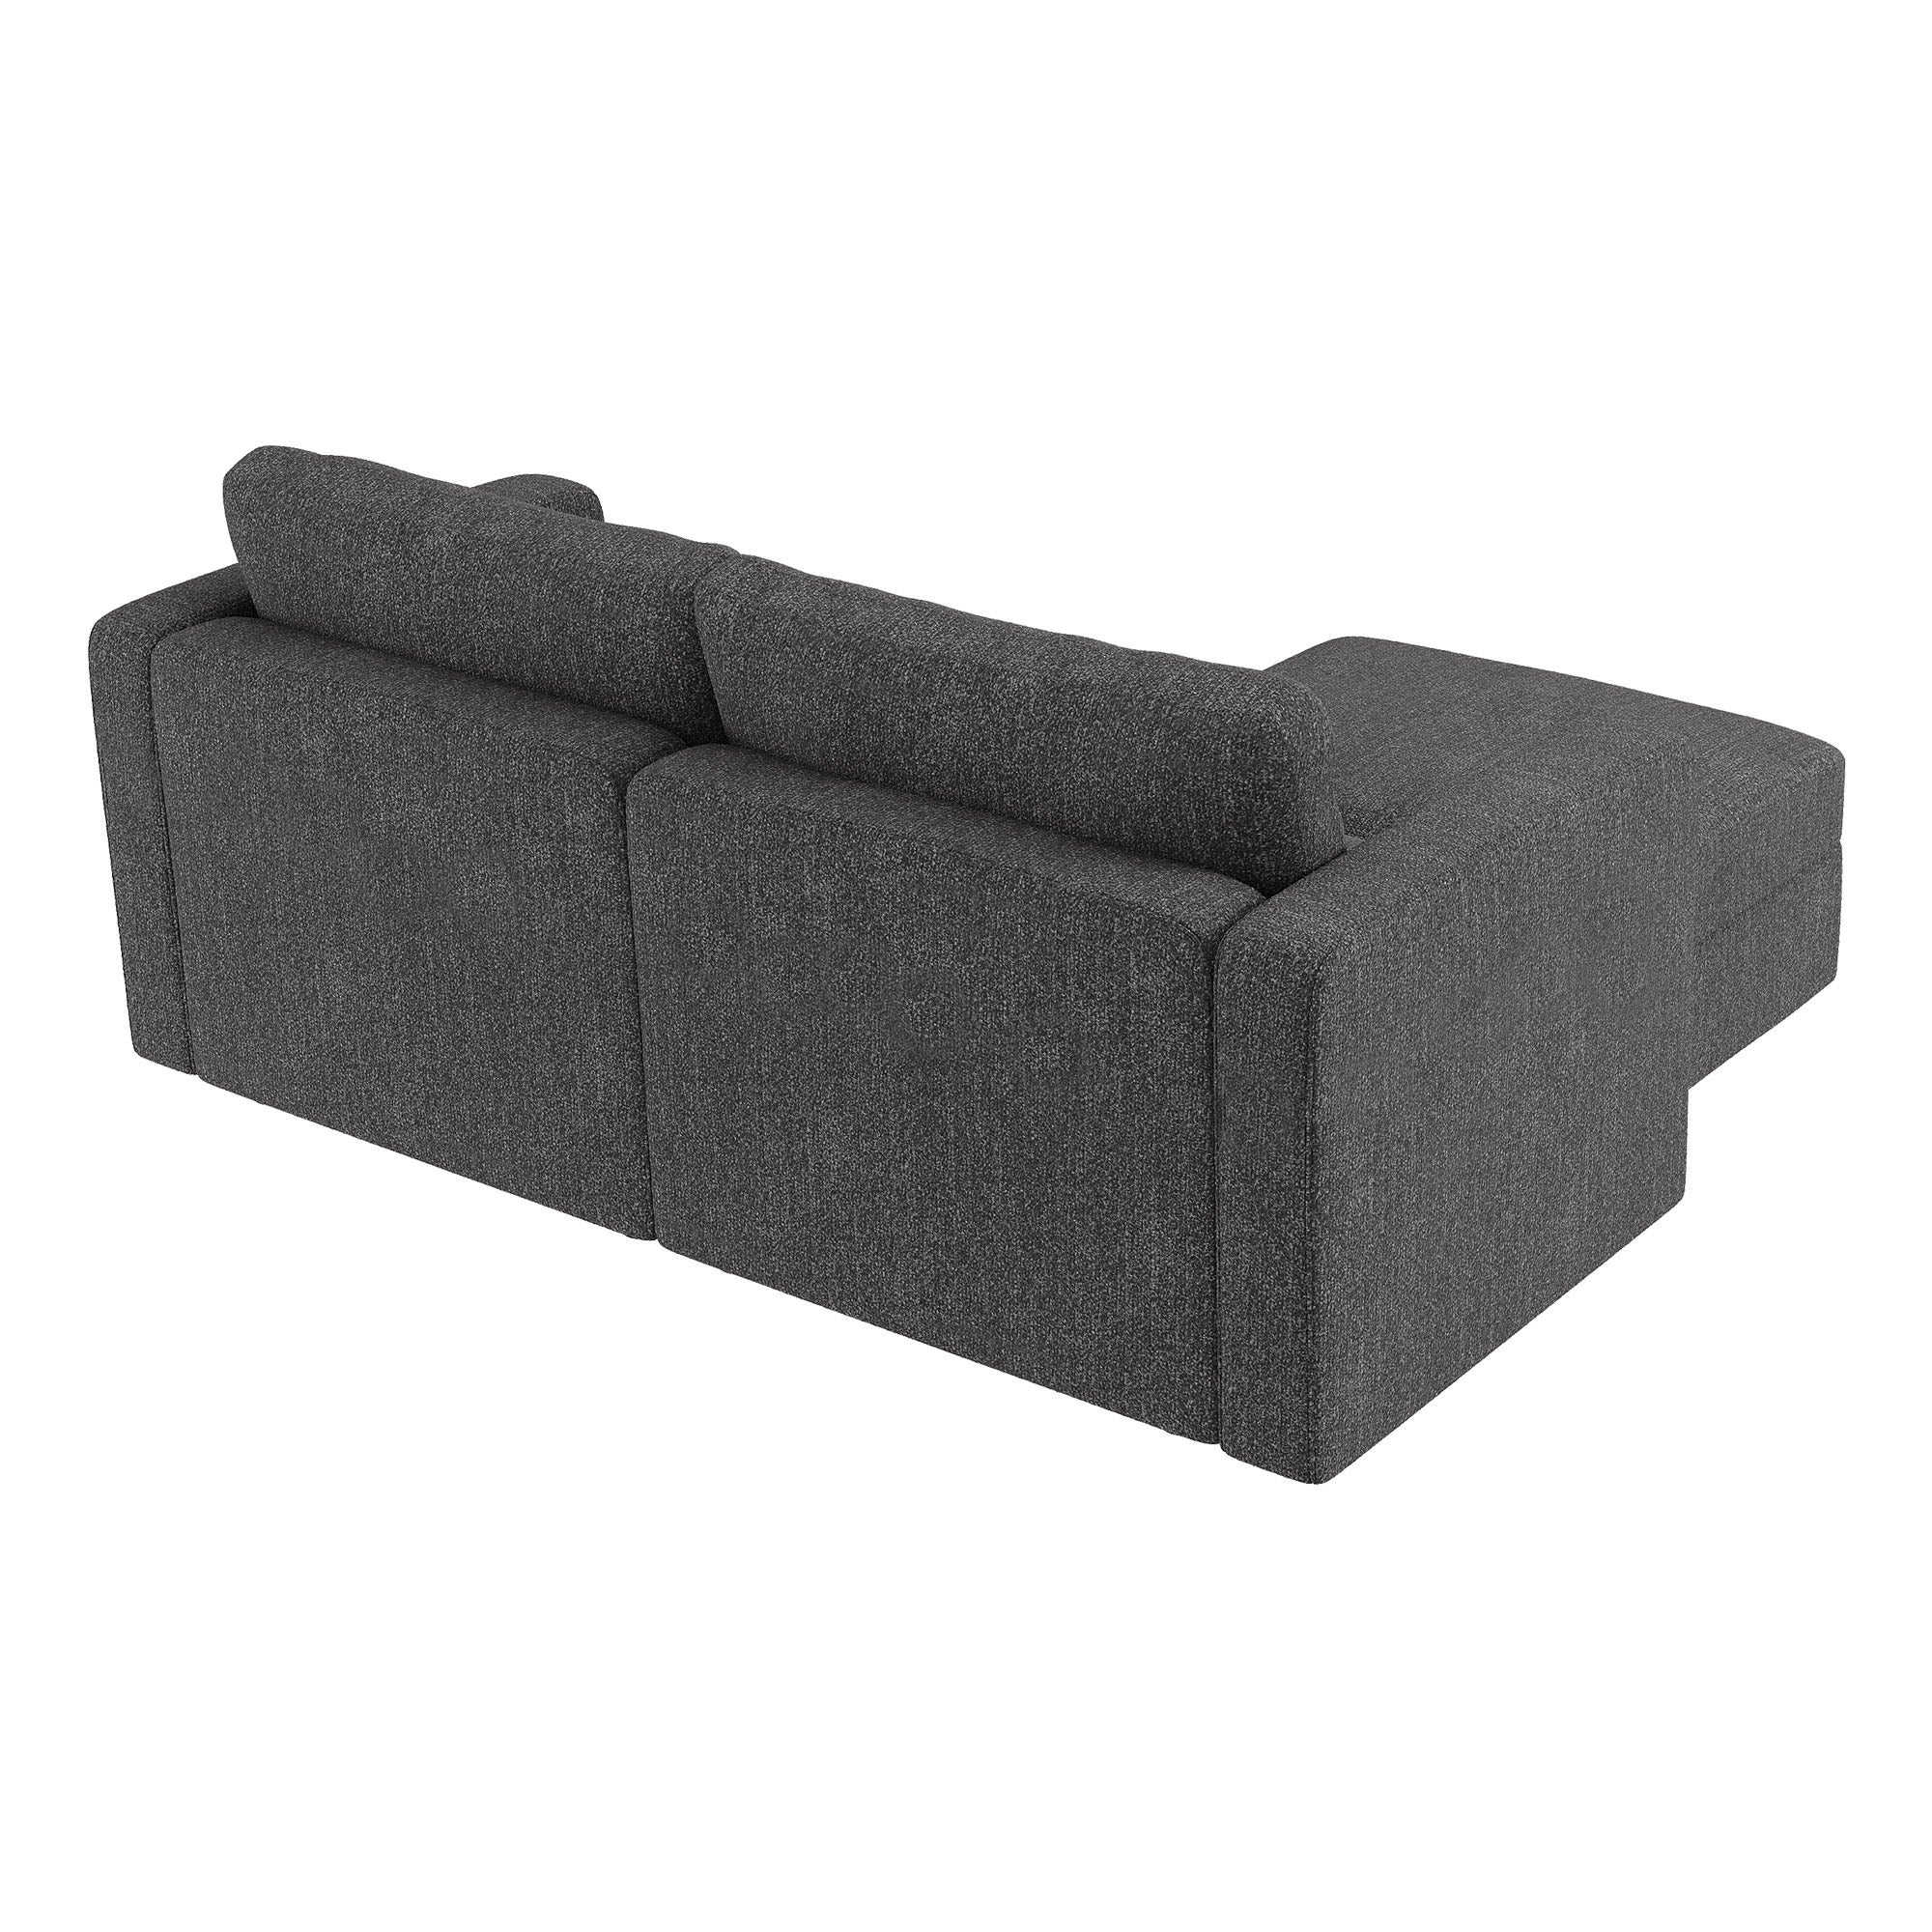 HONBAY Polyester Customized Modular Loveseat Sofa with Convertible Storage Ottoman